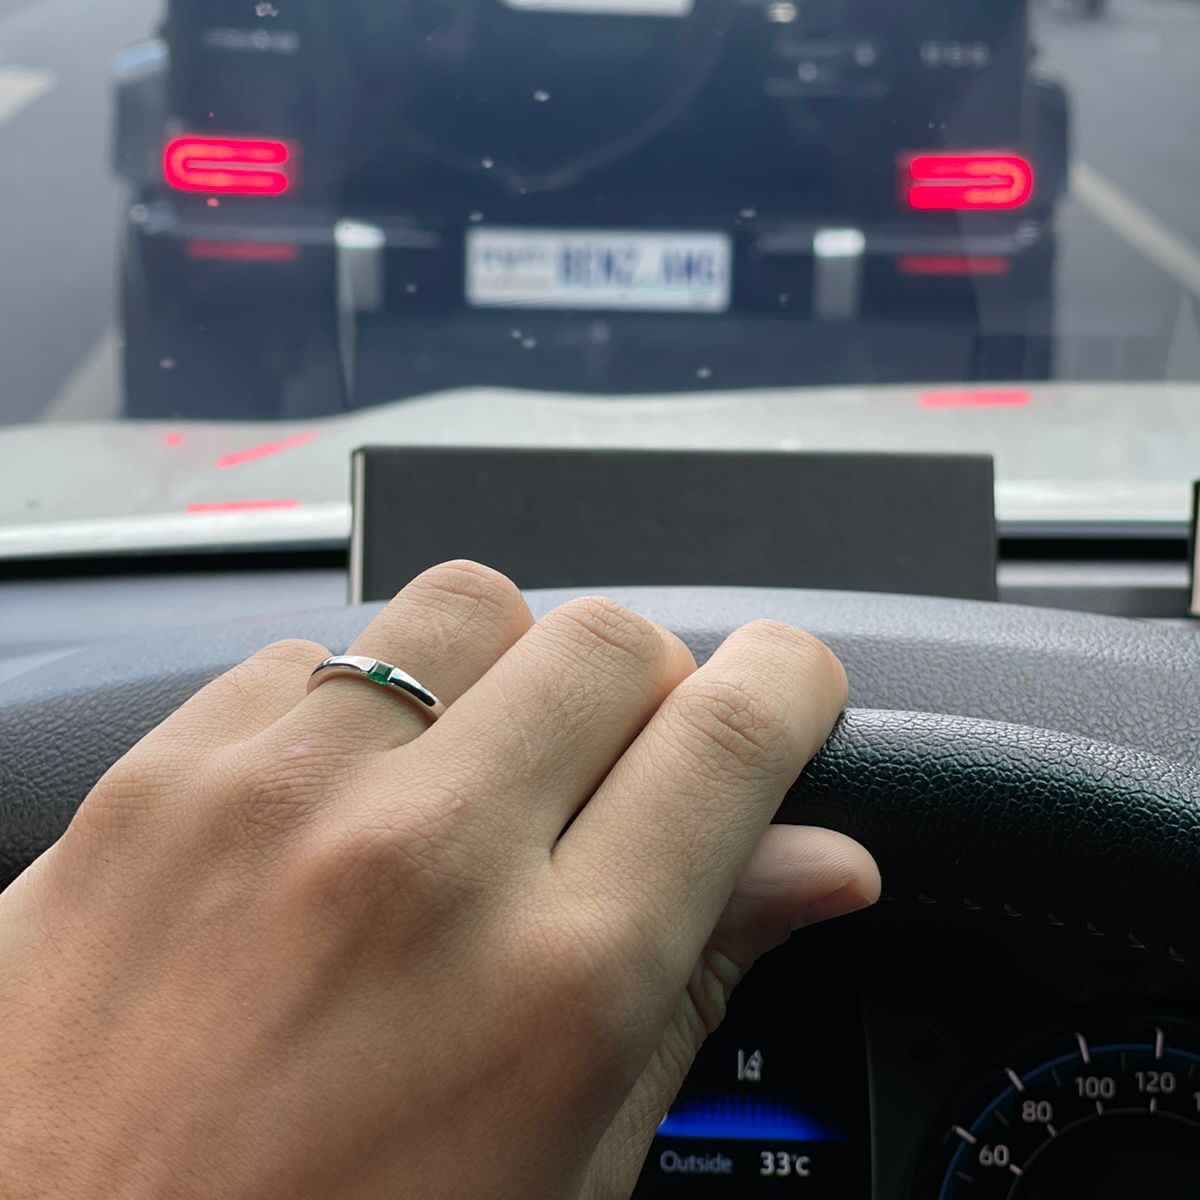 men's engagement ring